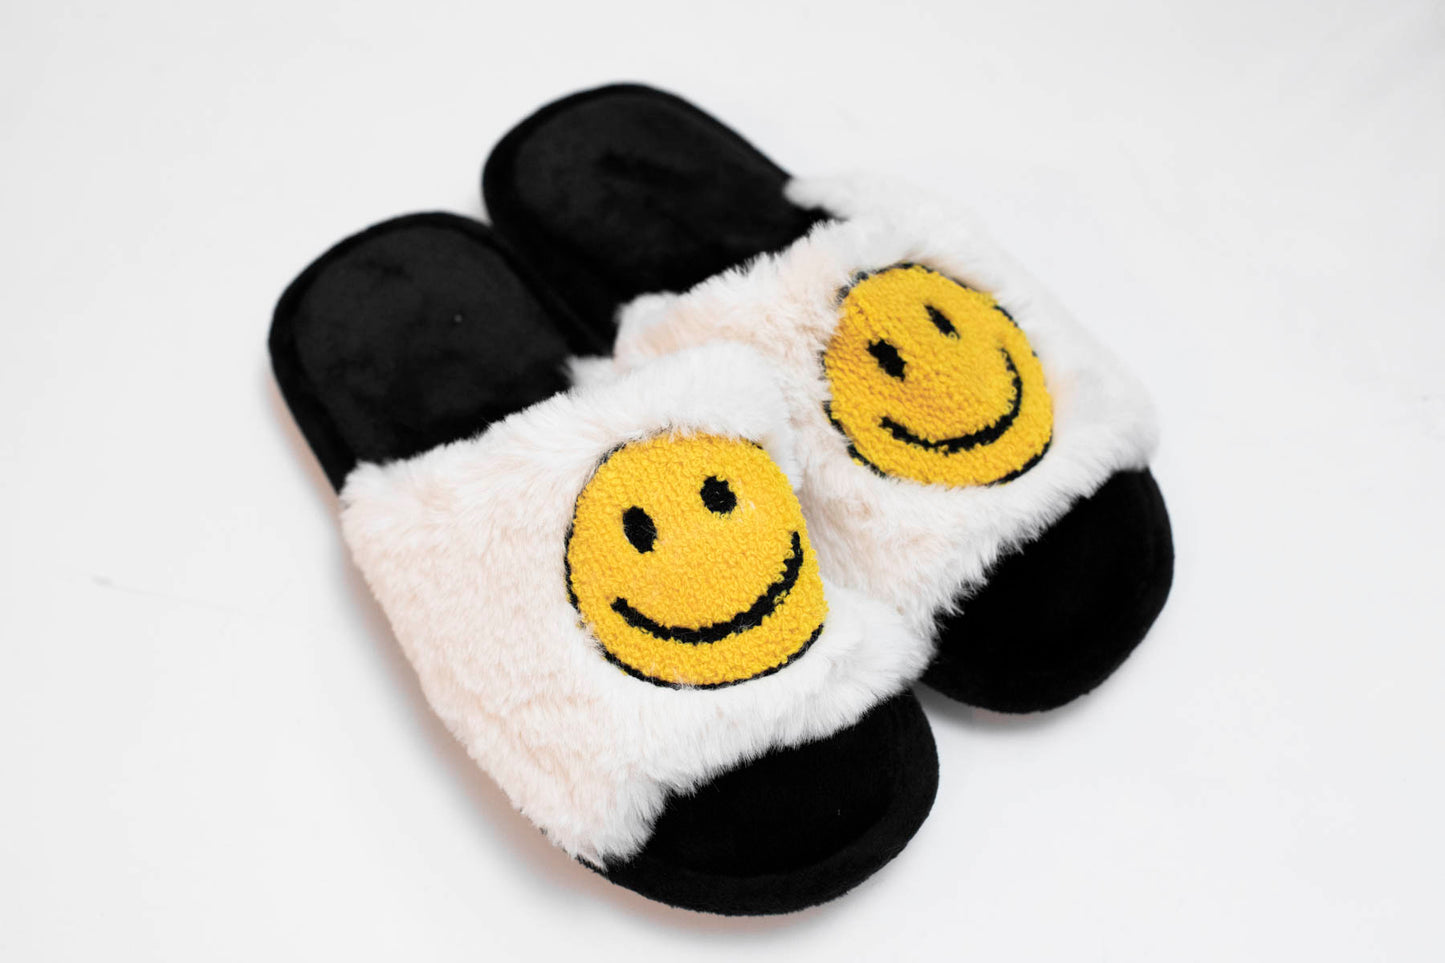 Happy Face Peep Toe Slippers